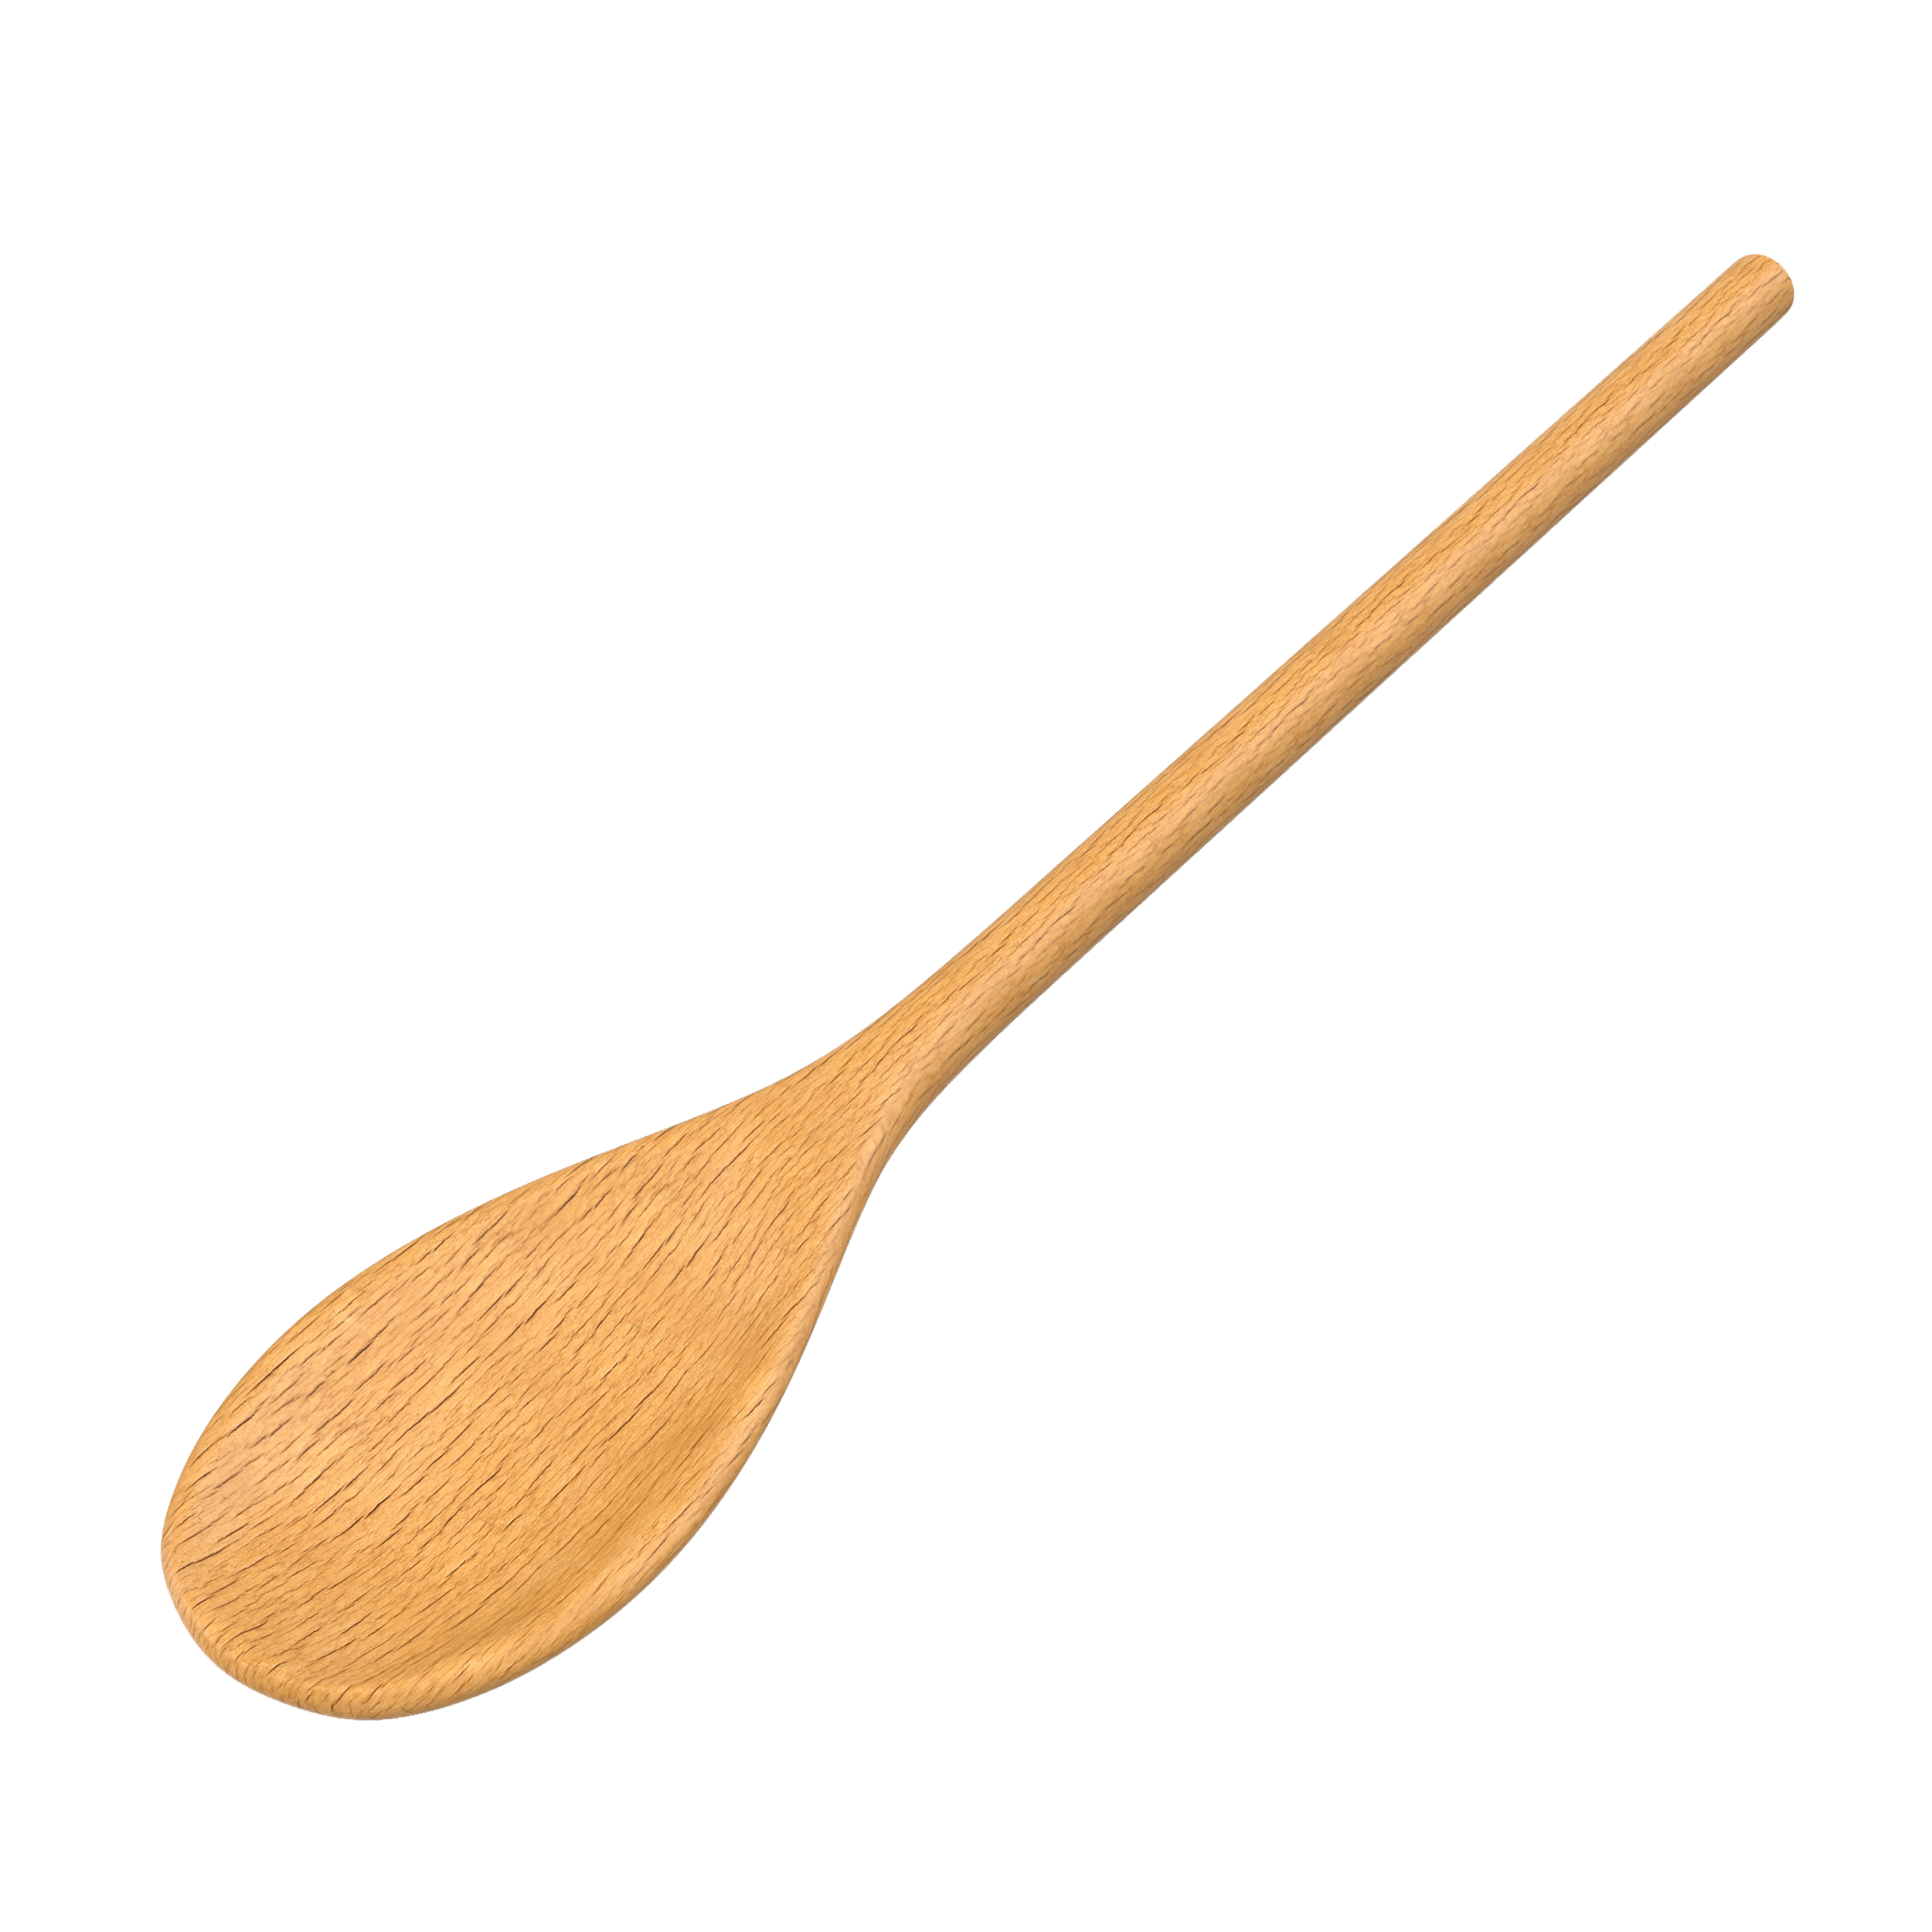 35316 2 Wooden Spoon Transparent 